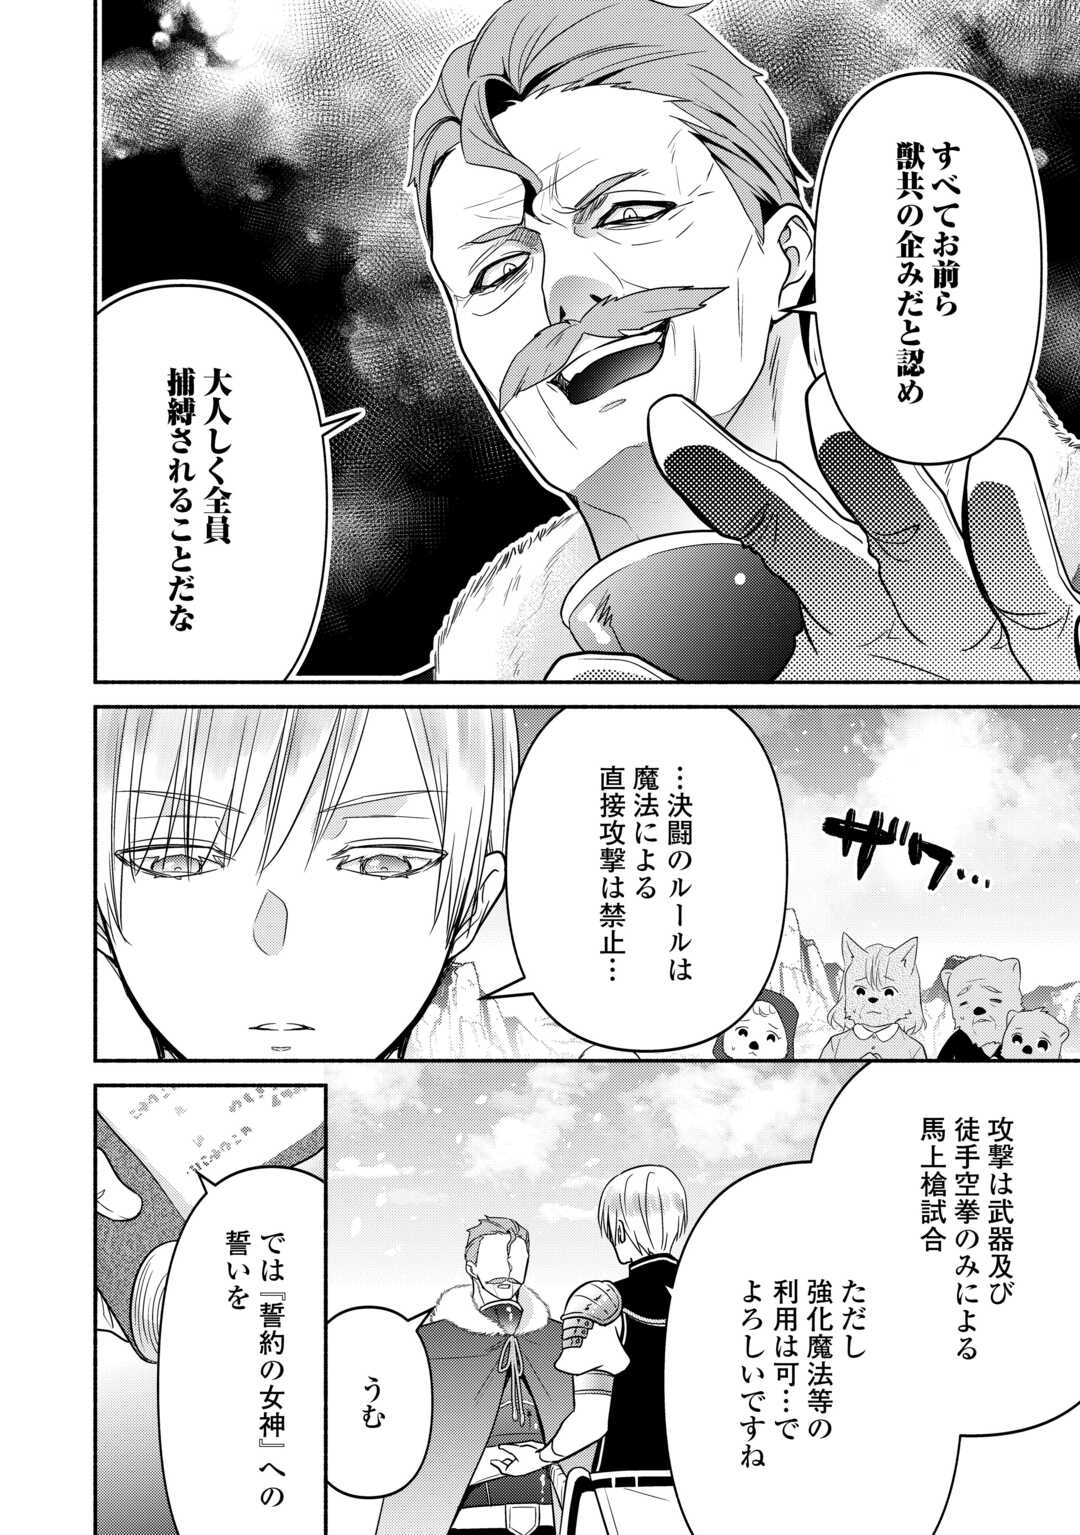 Tensei Youjo. Kamikemono to Ouji to, Saikyou no Ojisan Youhei-dan no Naka de Ikiru. - Chapter 22 - Page 2